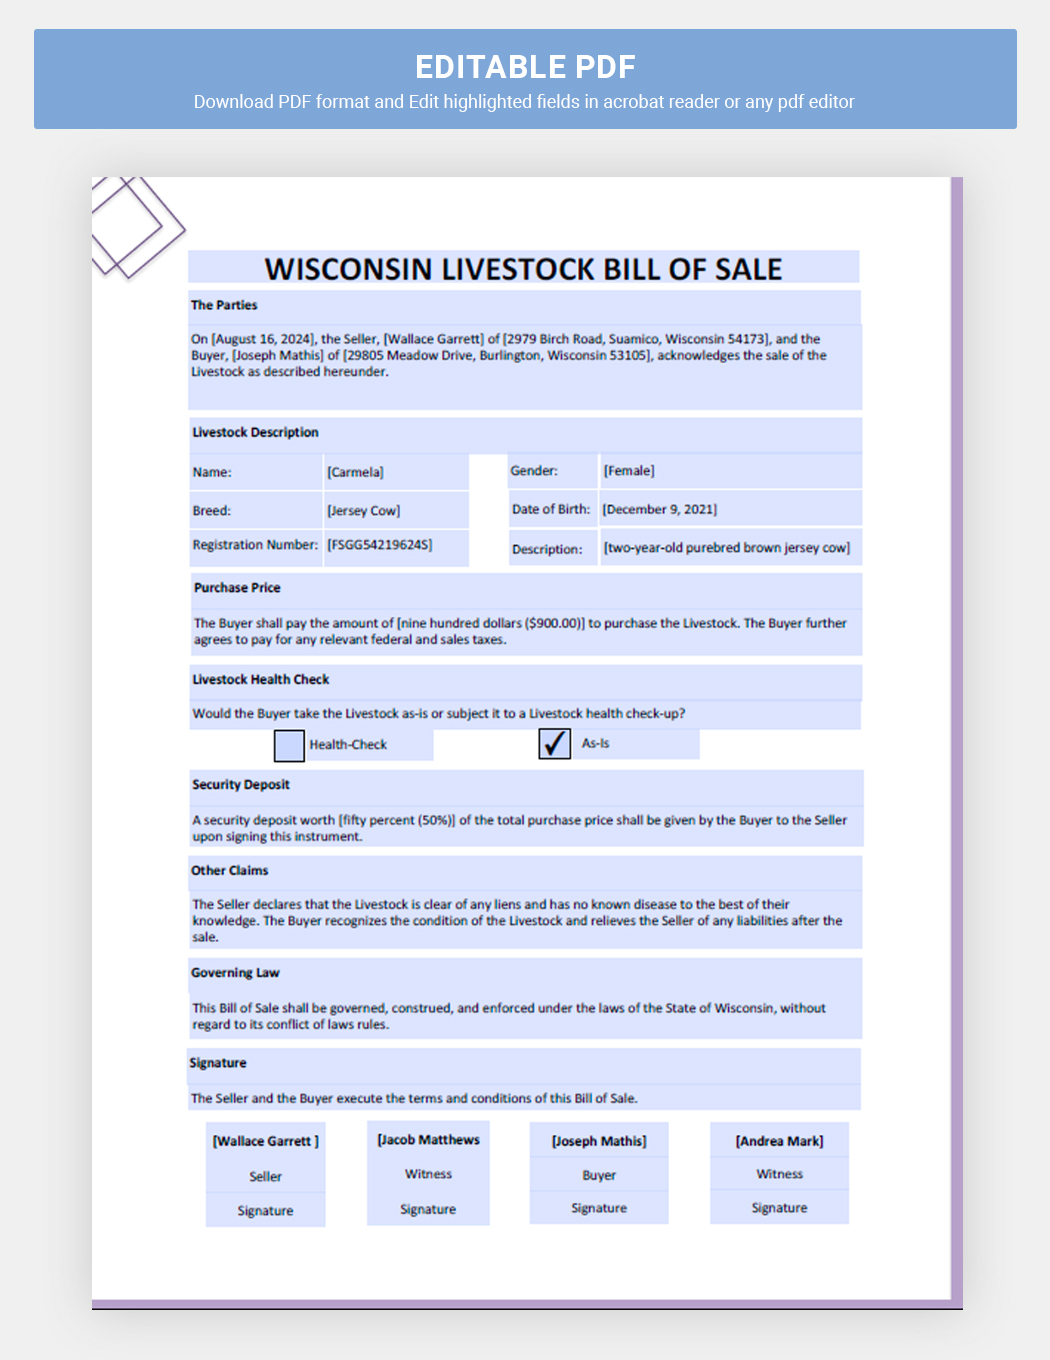 Wisconsin Livestock Bill of Sale Template